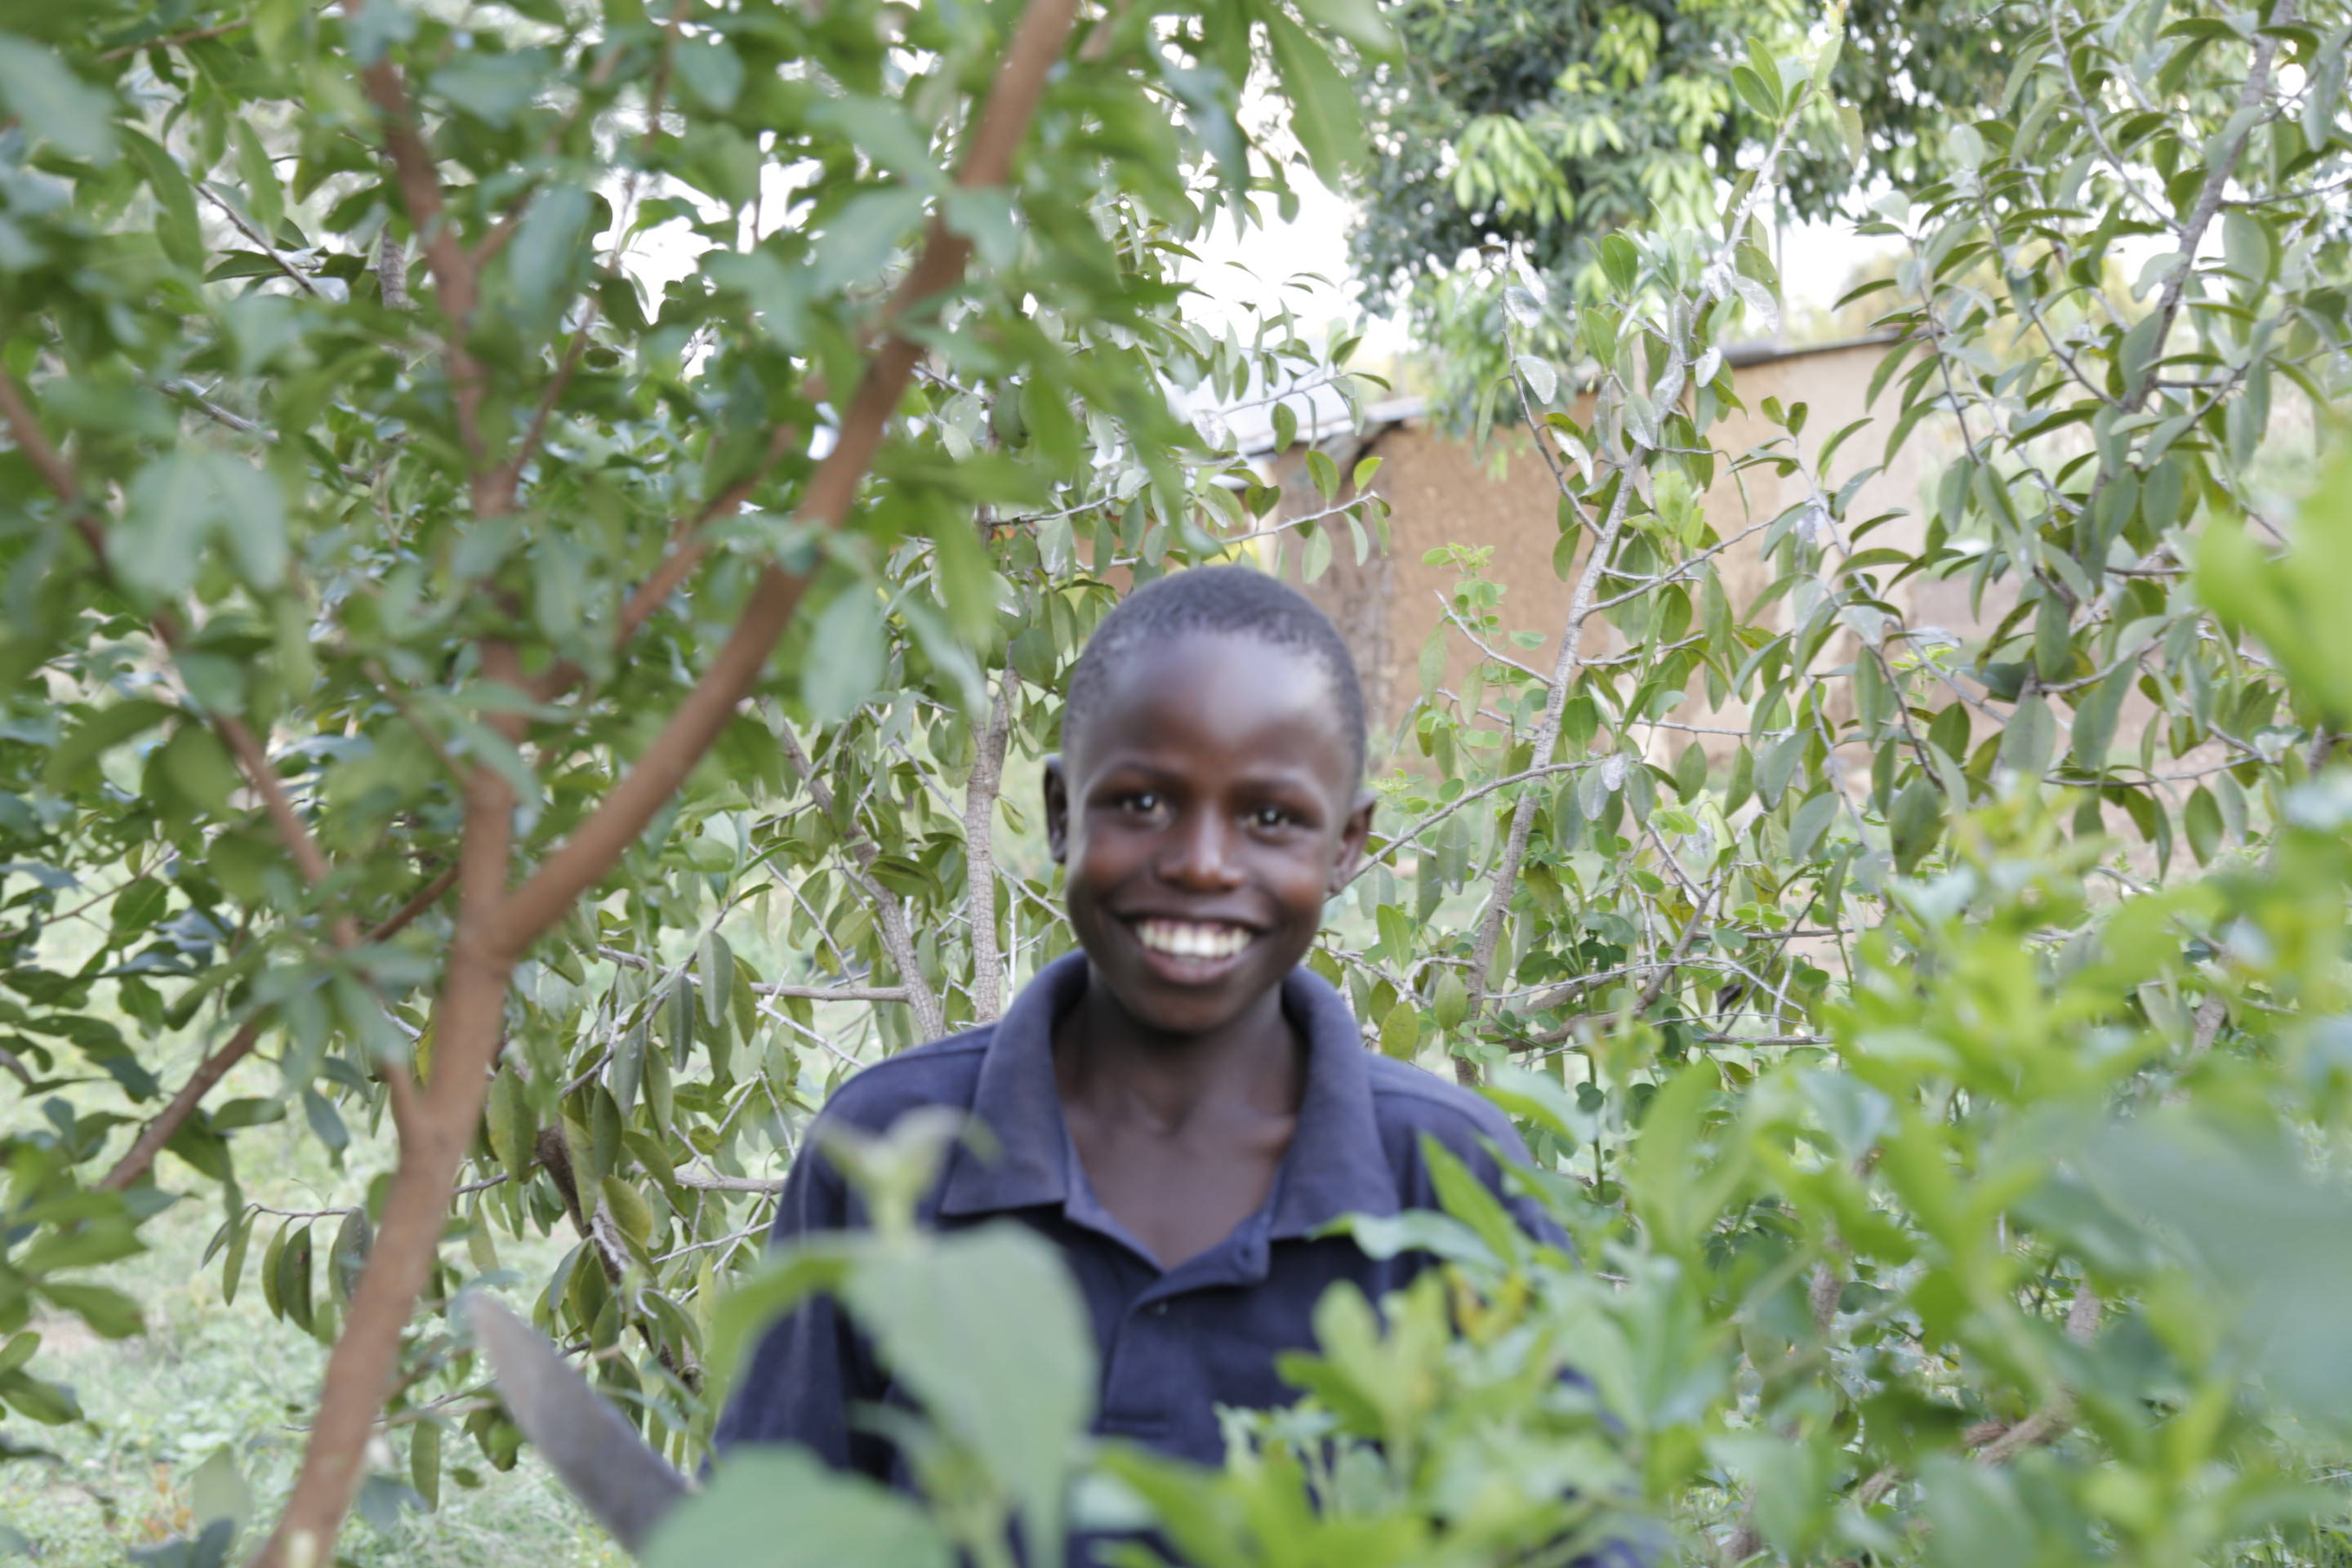  Boy pruning trees on farm in Kenya, helping climate change